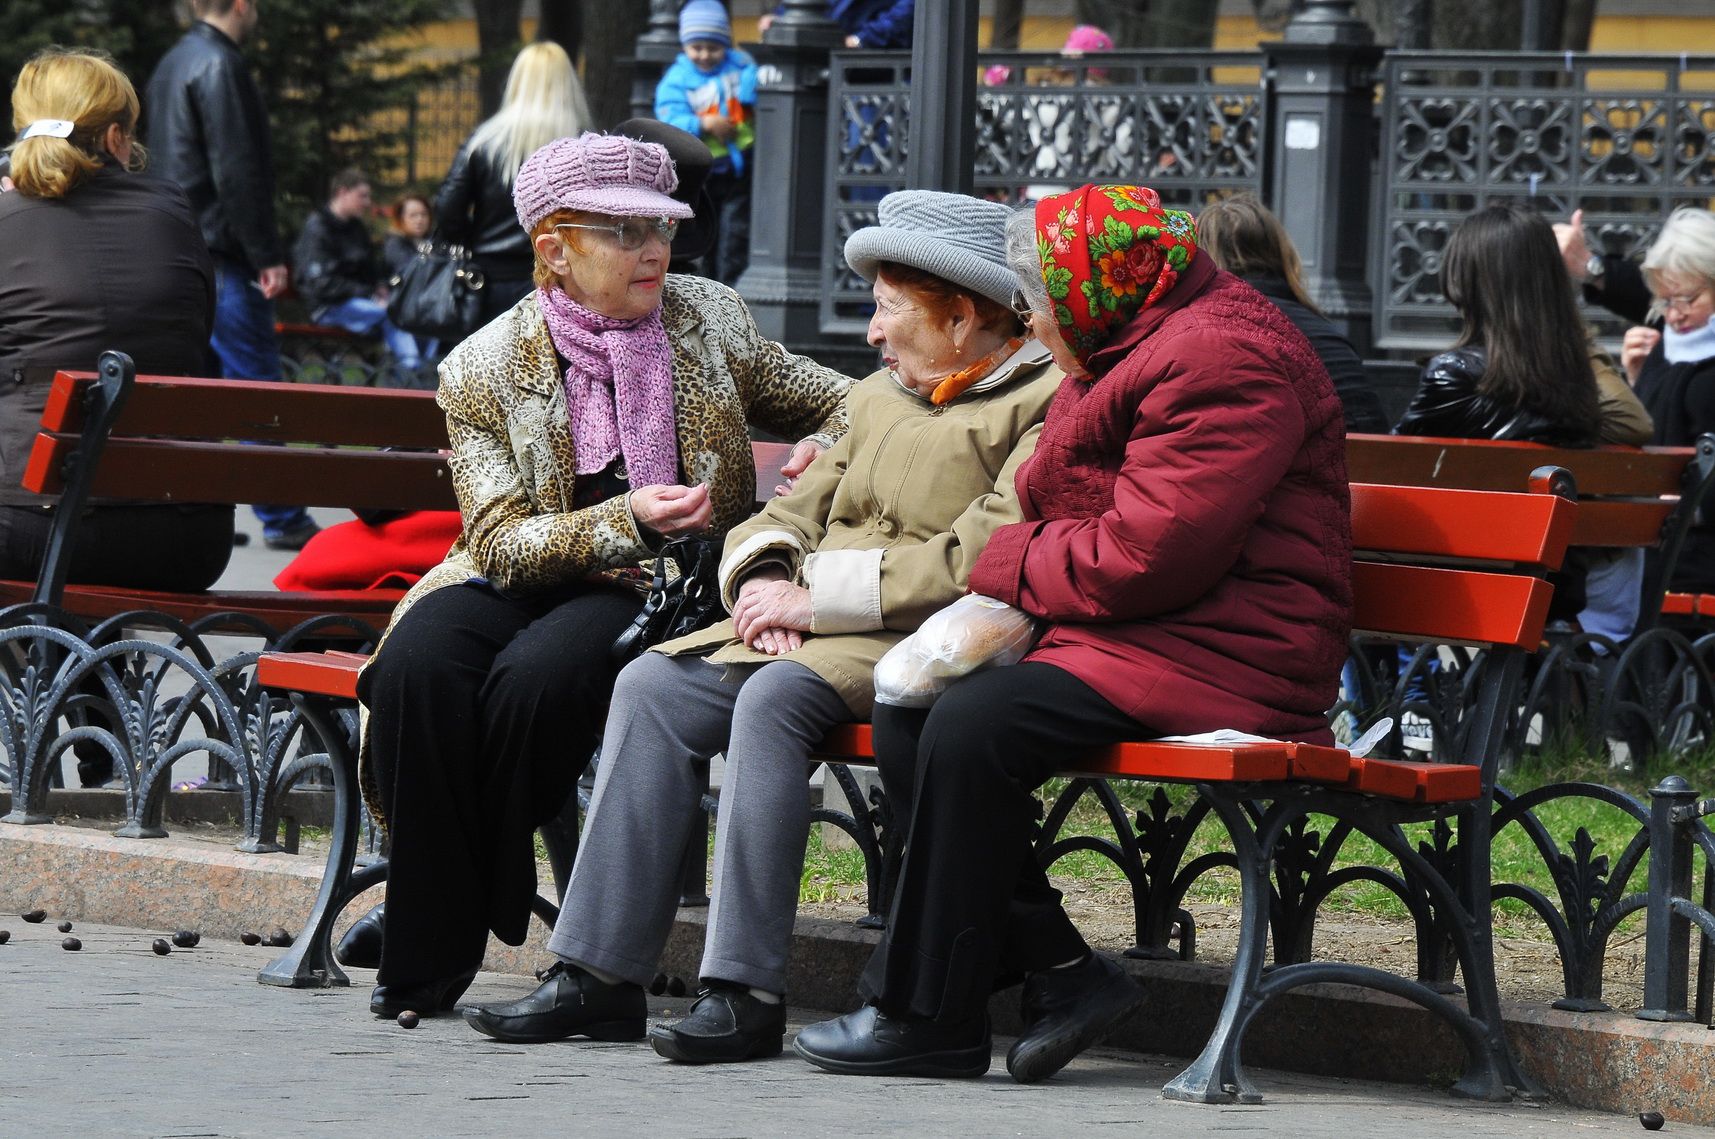 Бабушки спорят. Пенсионерки на лавочке. Пенсионеры на лавочке. Пожилые люди на скамейке. Пожилые люди на улице.